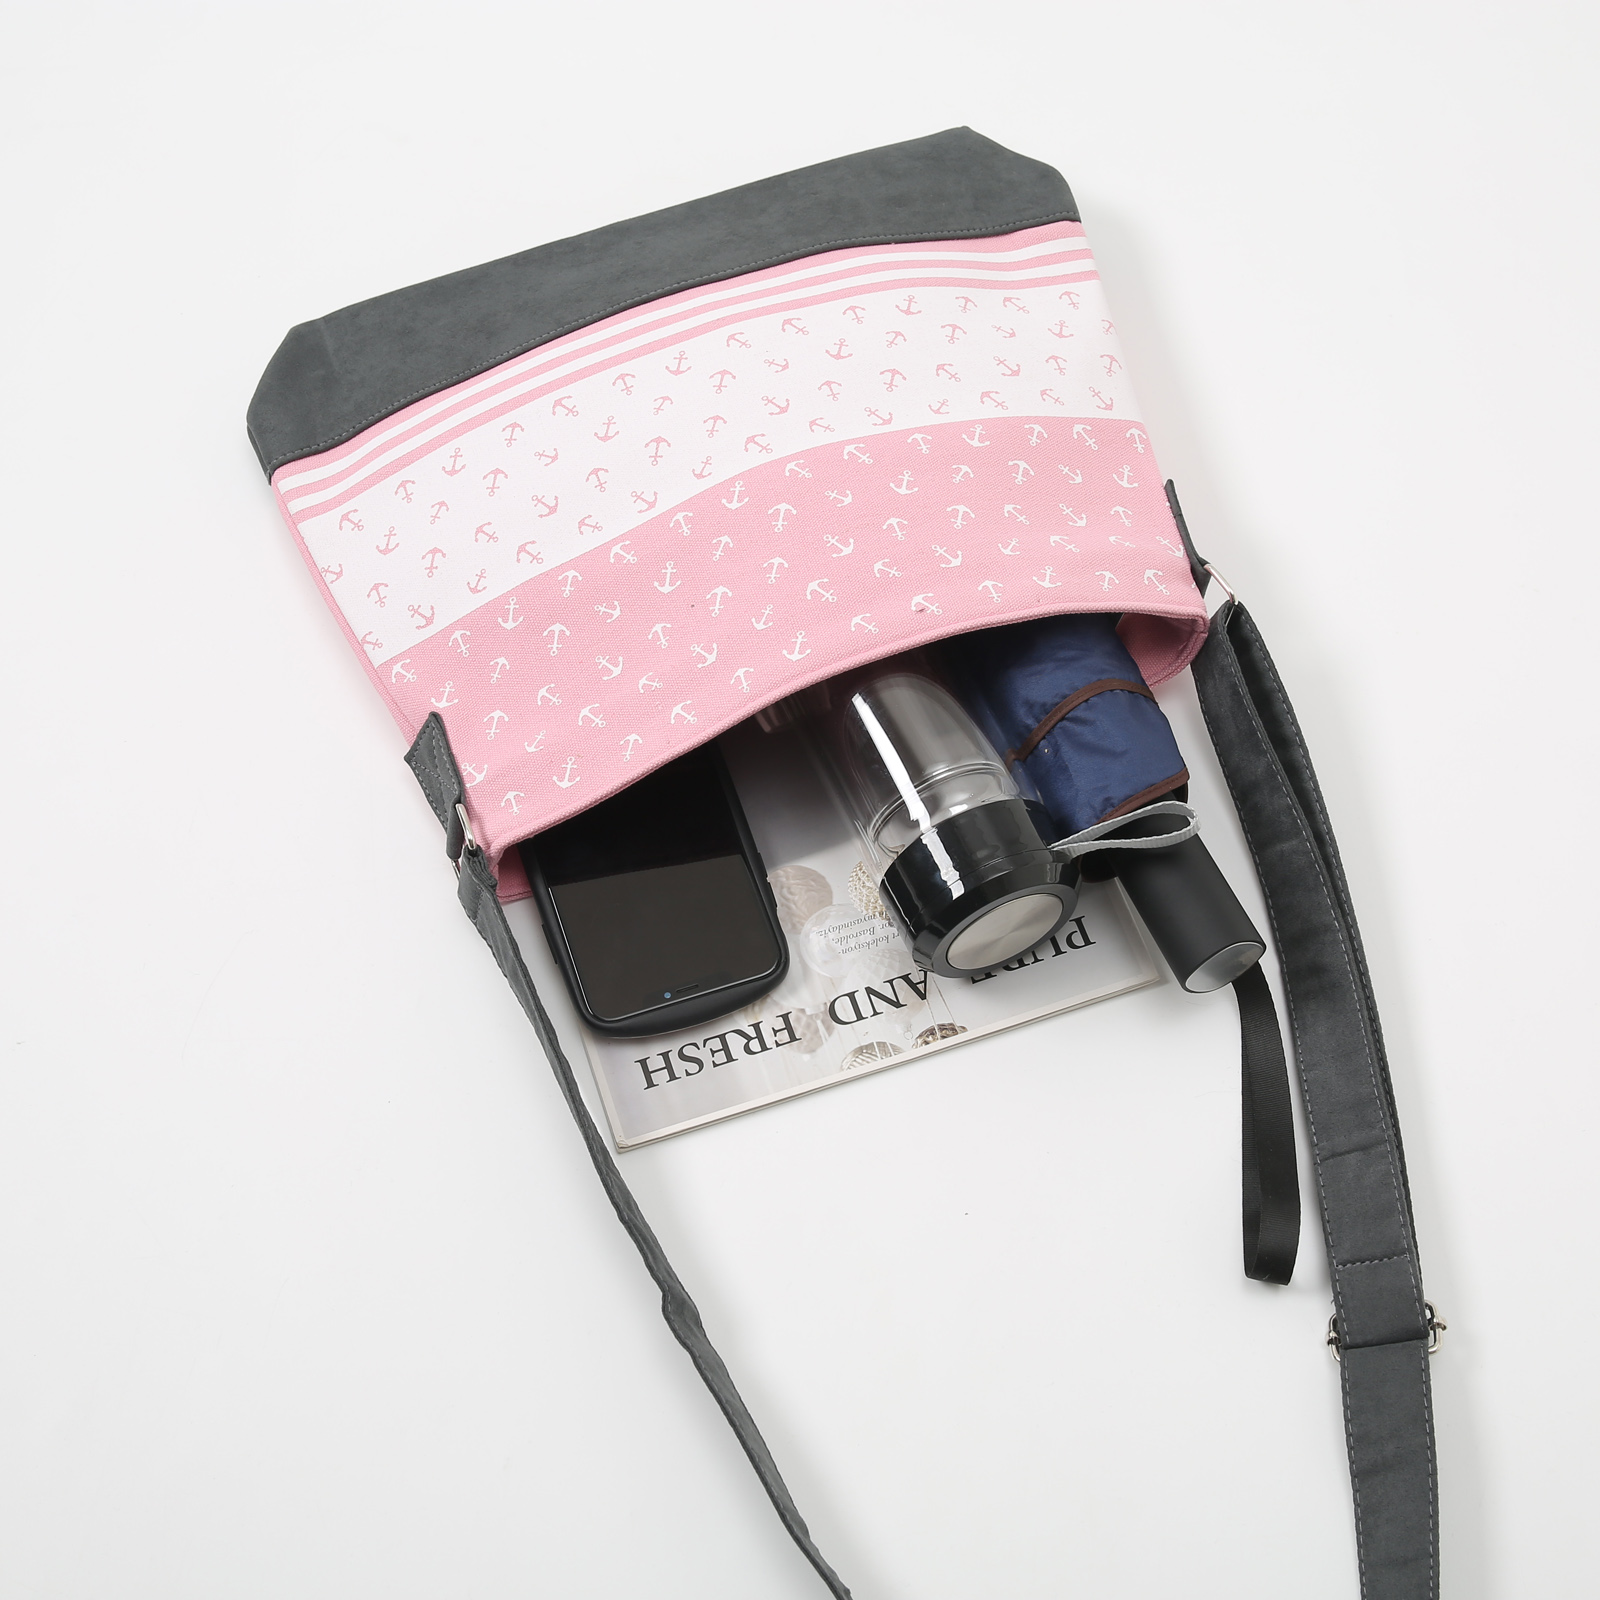 Anchor Canvas Striped Backpack with Adjustable Shoulder Straps